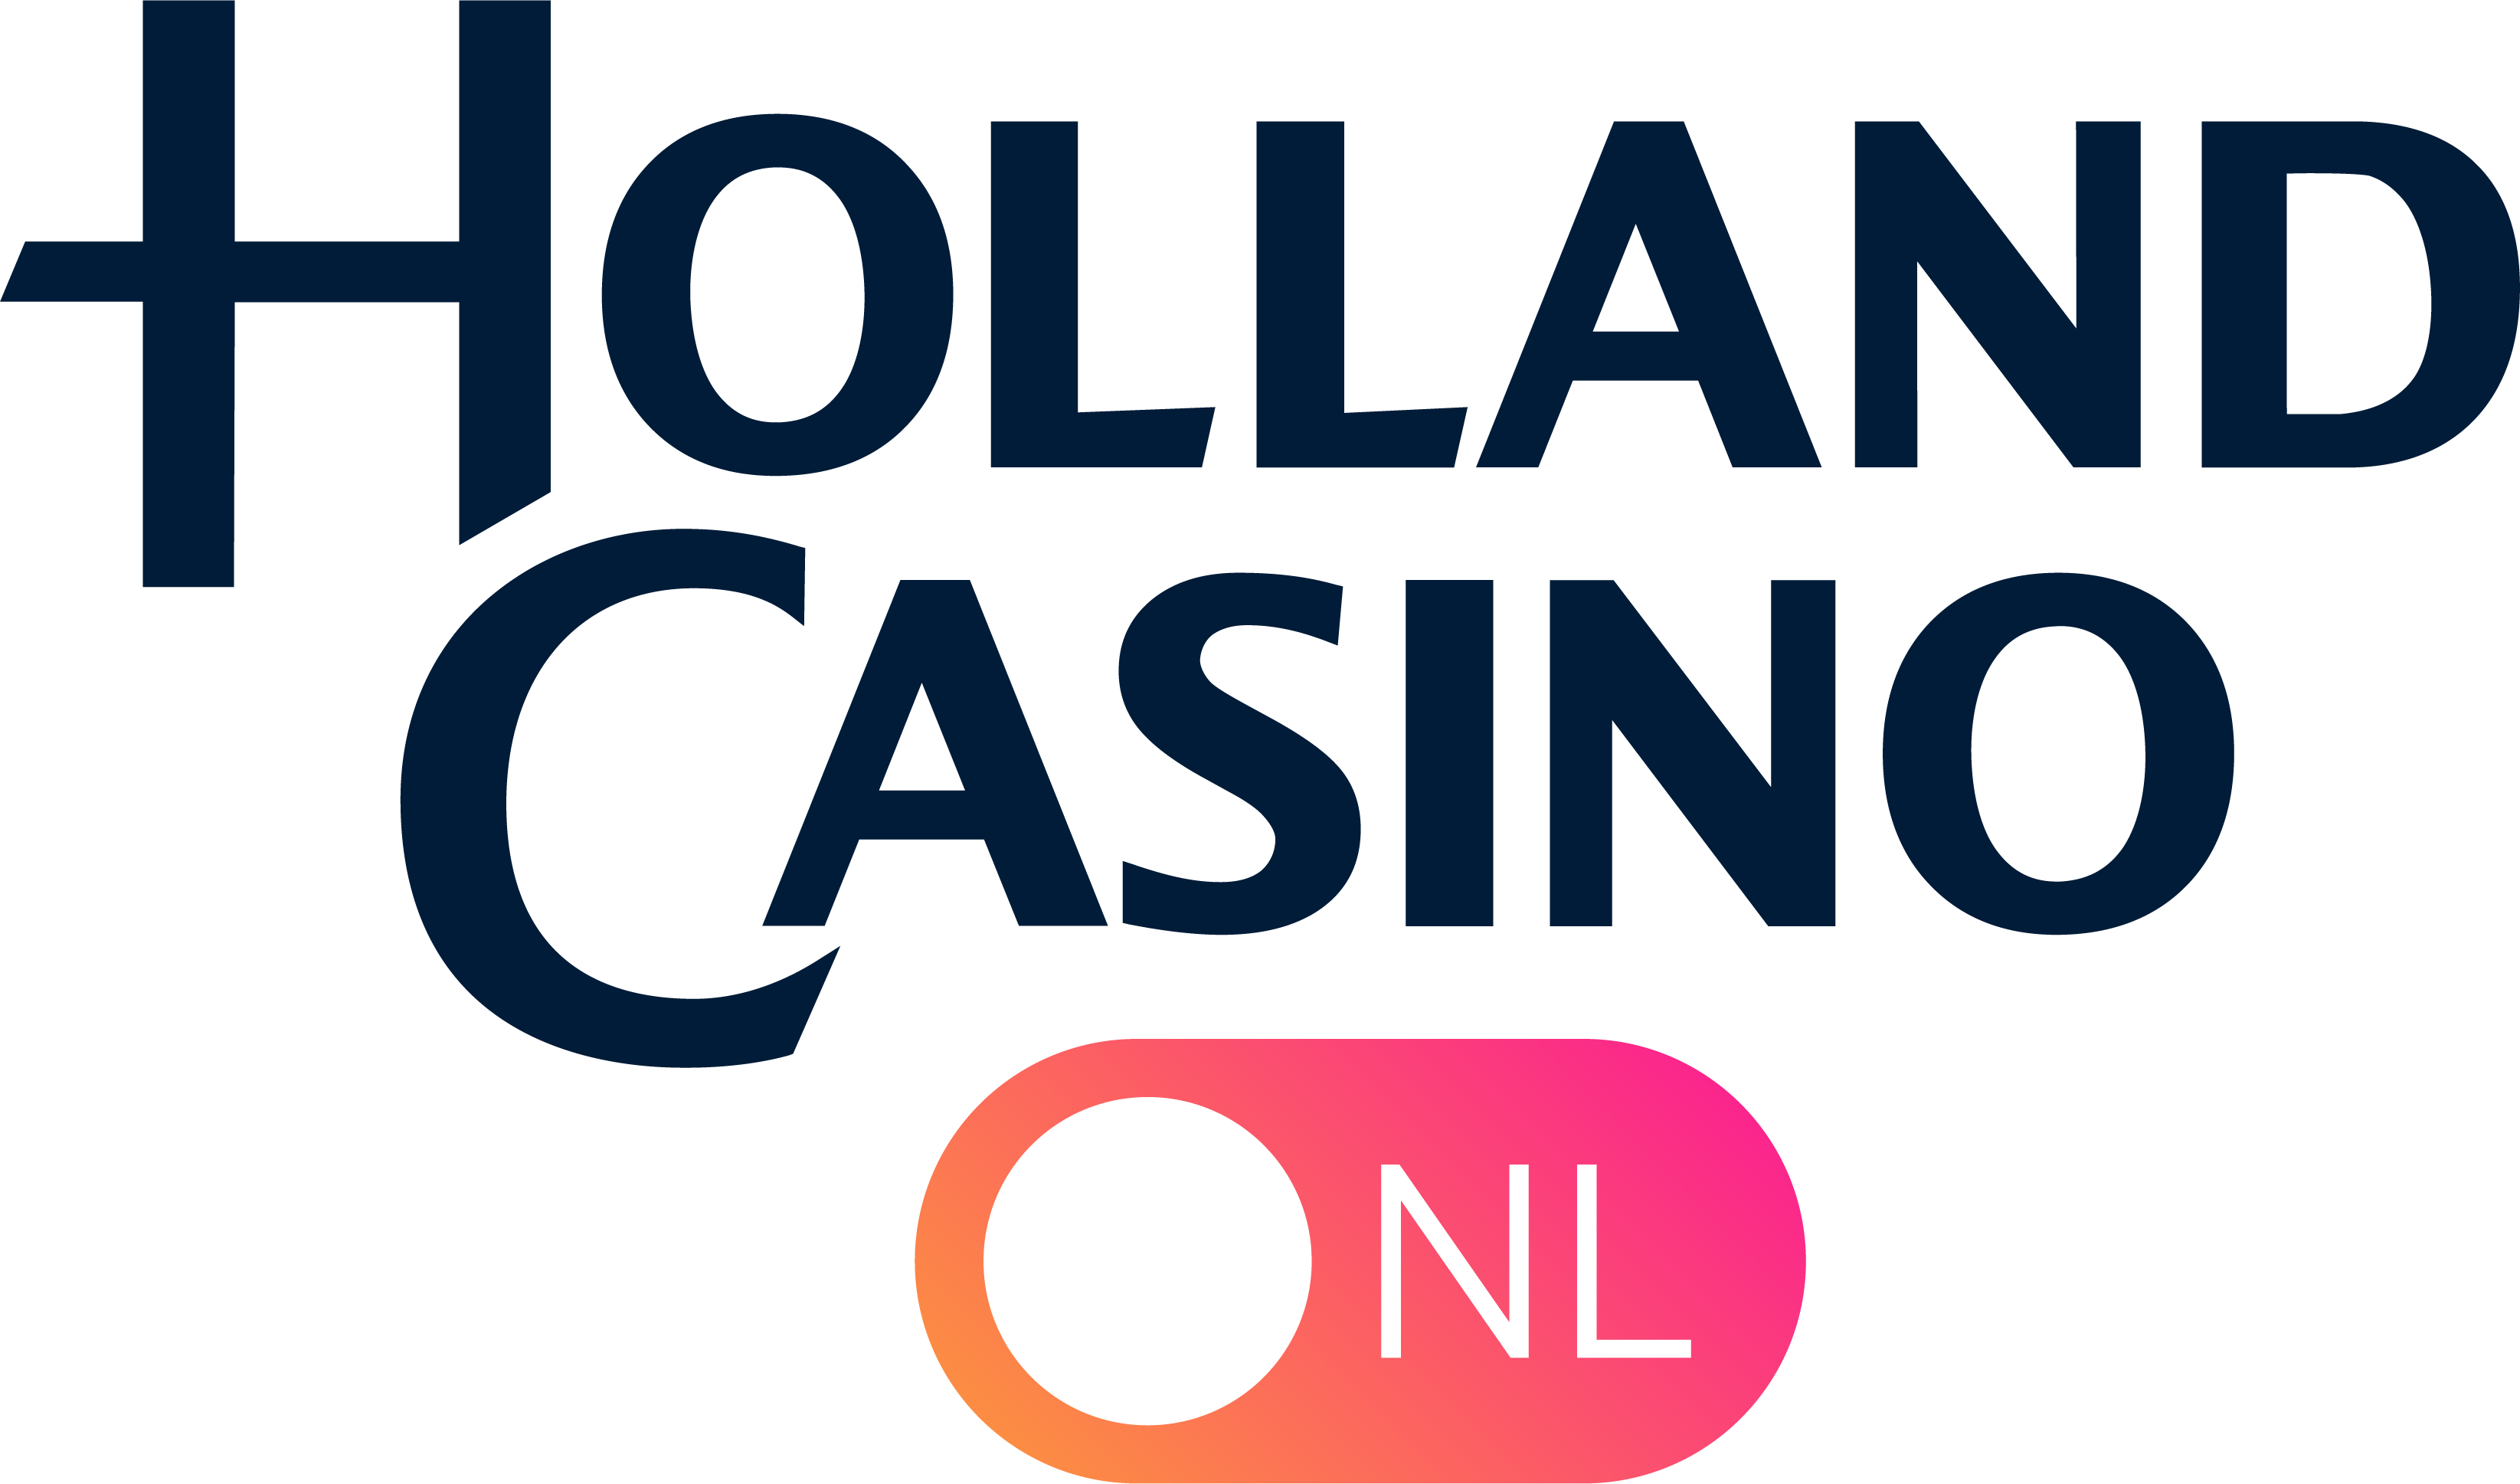 Holland Casino logo